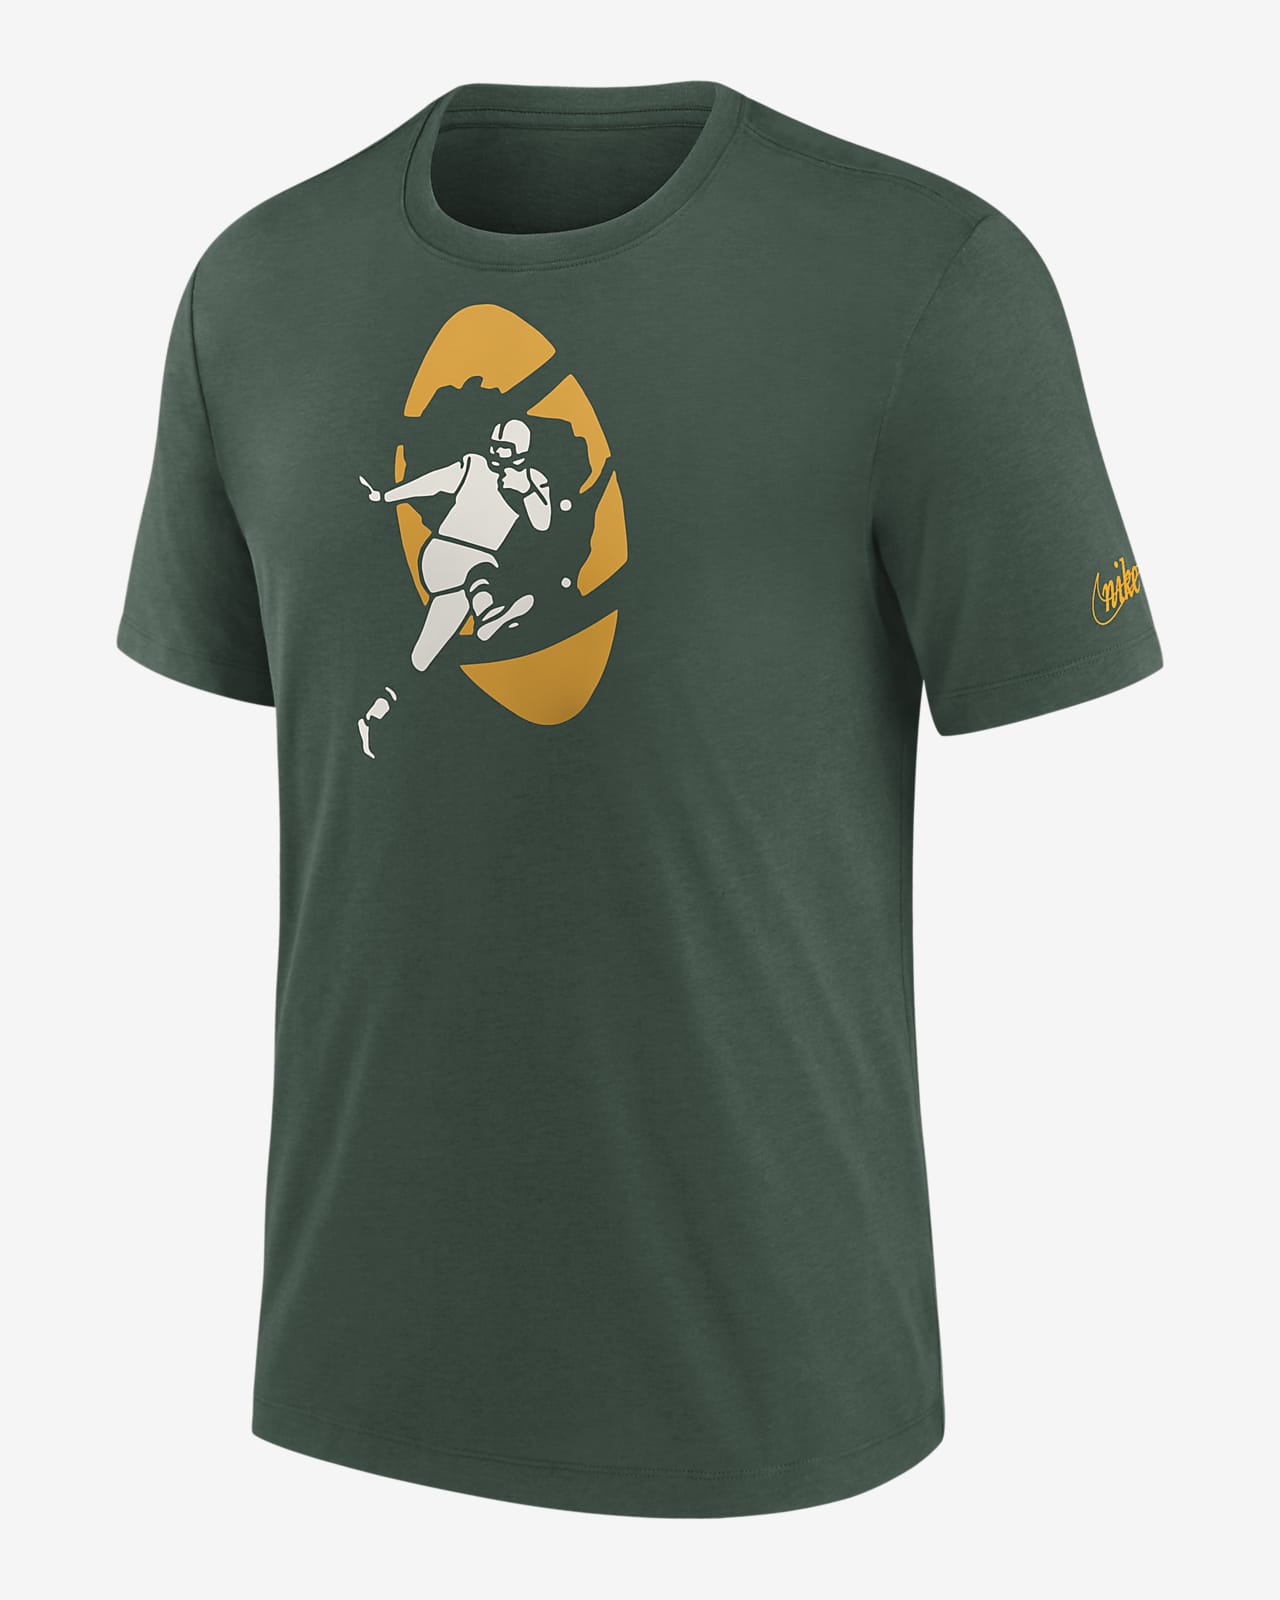 Playera Nike NFL para hombre Green Bay Packers Rewind Logo